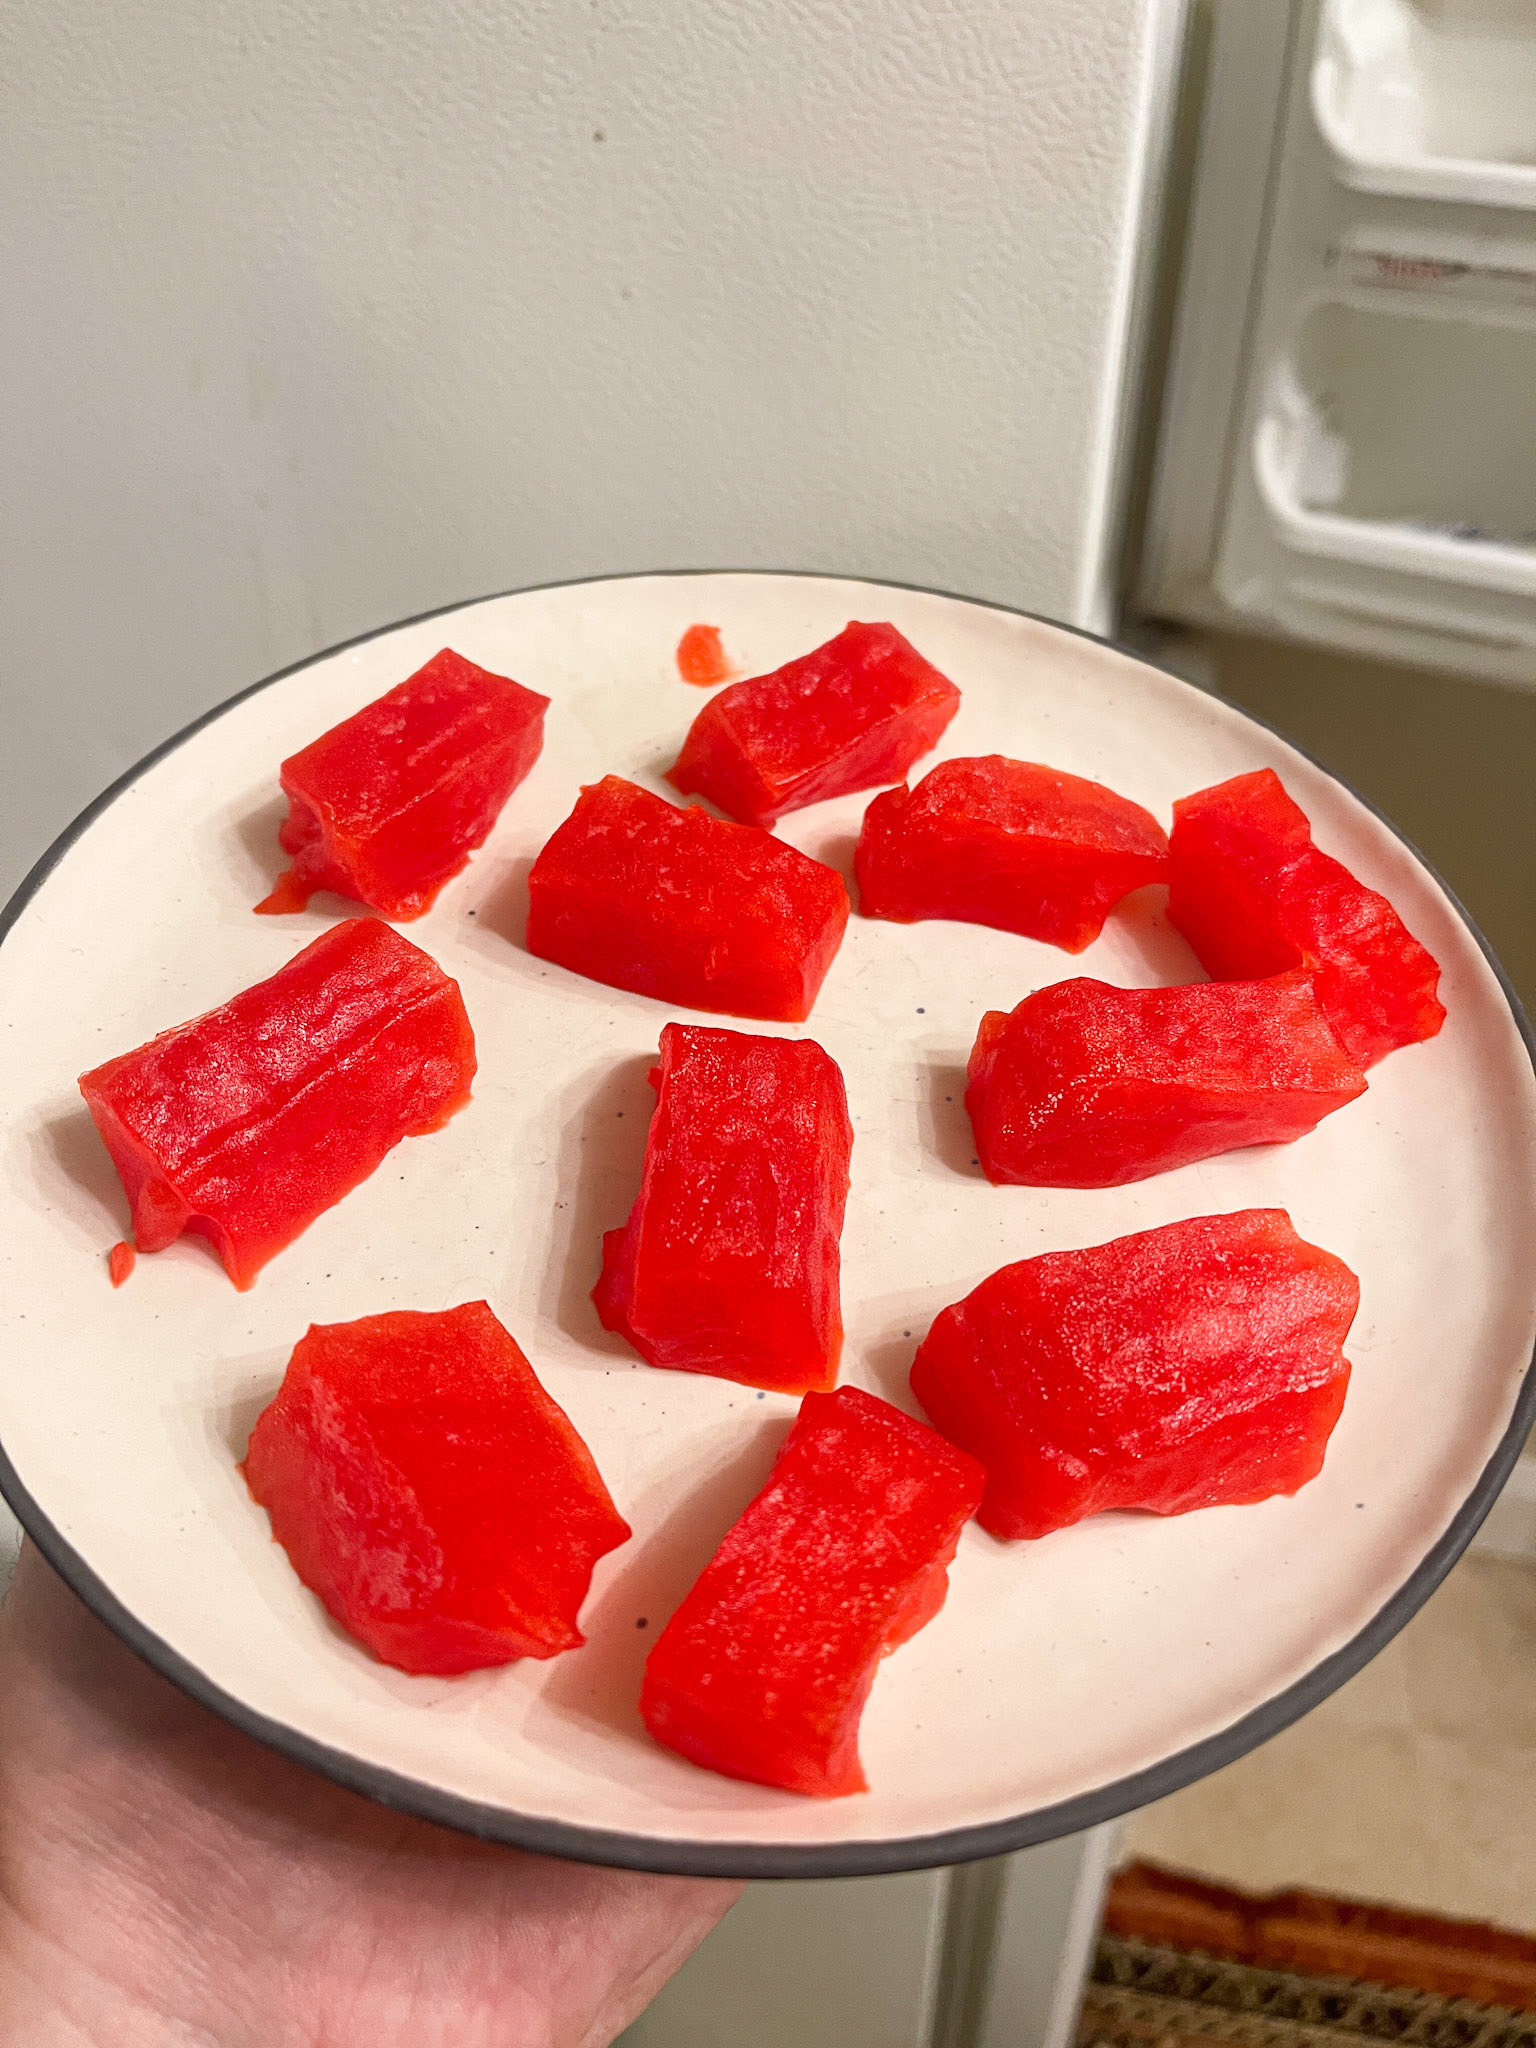 frozen jello on plate that looks kind of like raw tuna